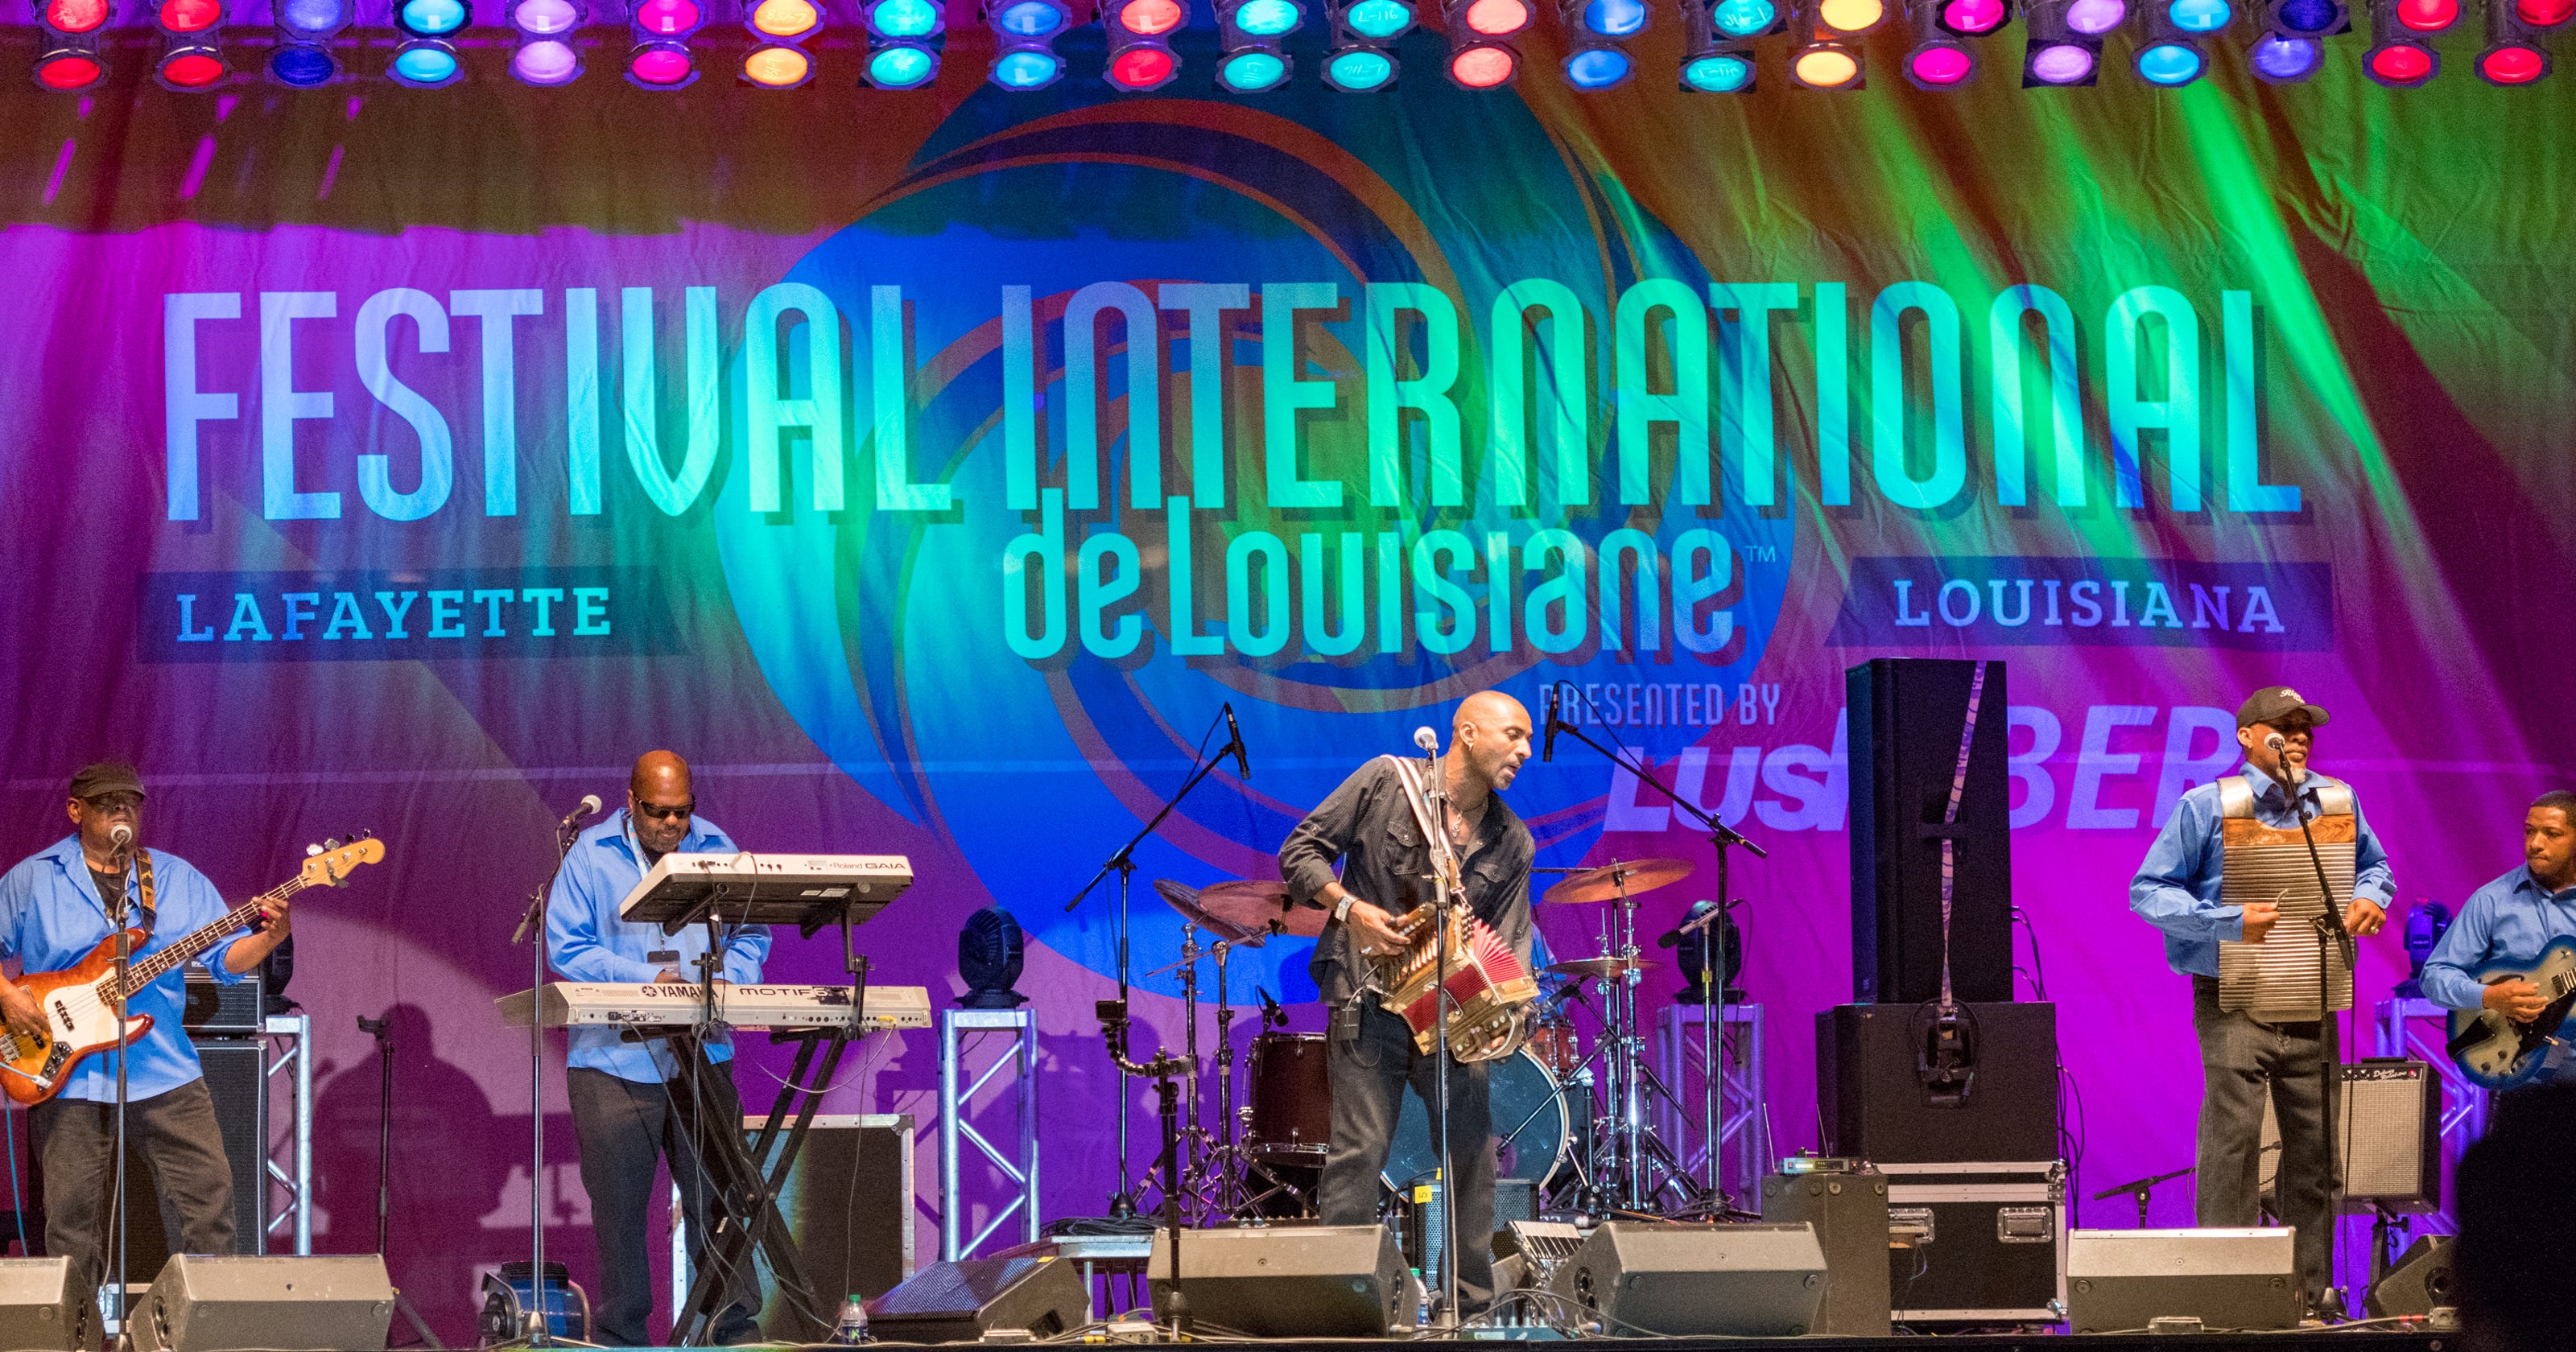 Find these deals at Festival International de Louisiane